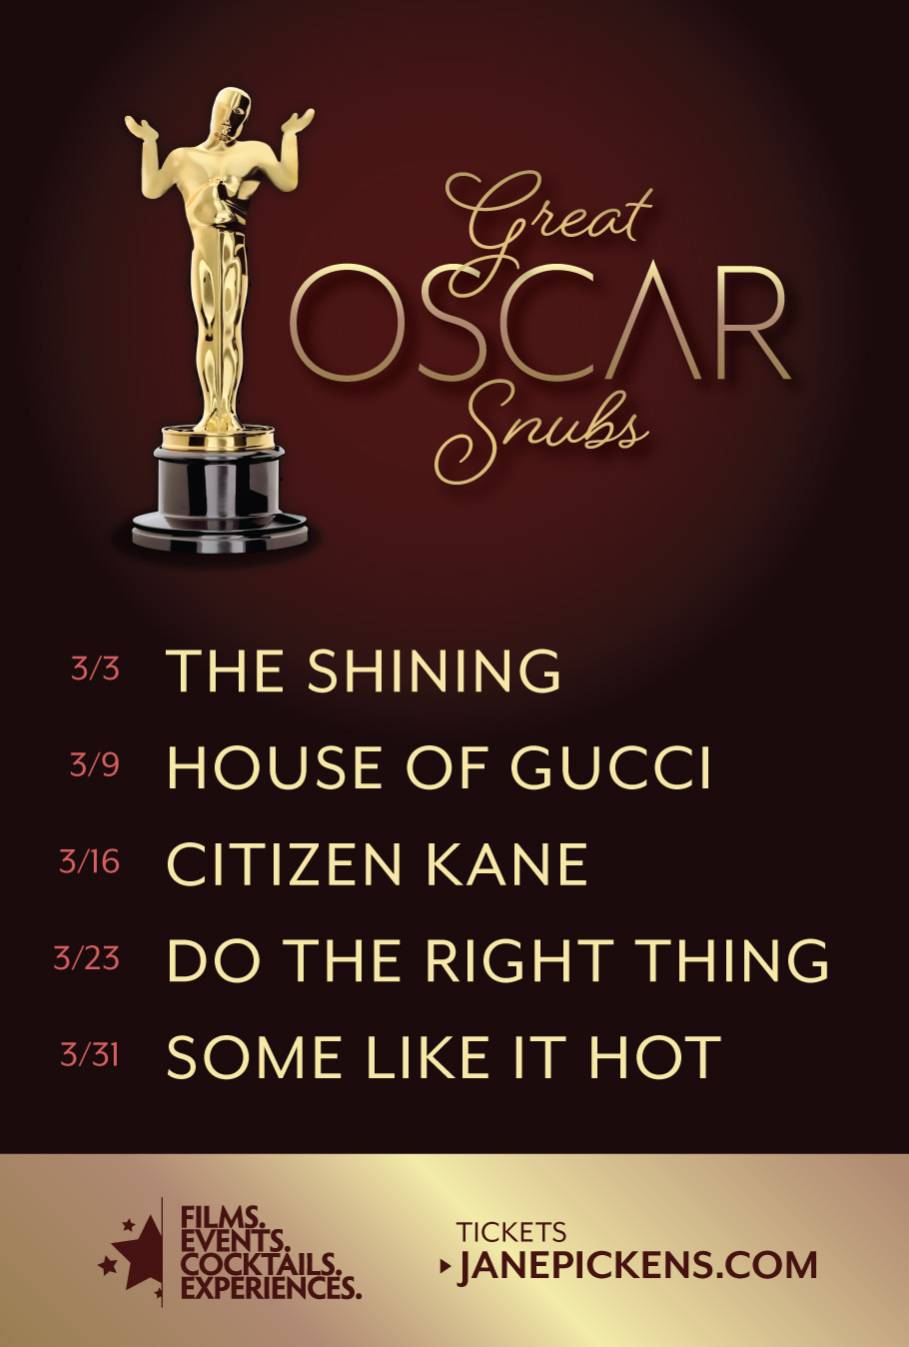 Great Oscar Snubs